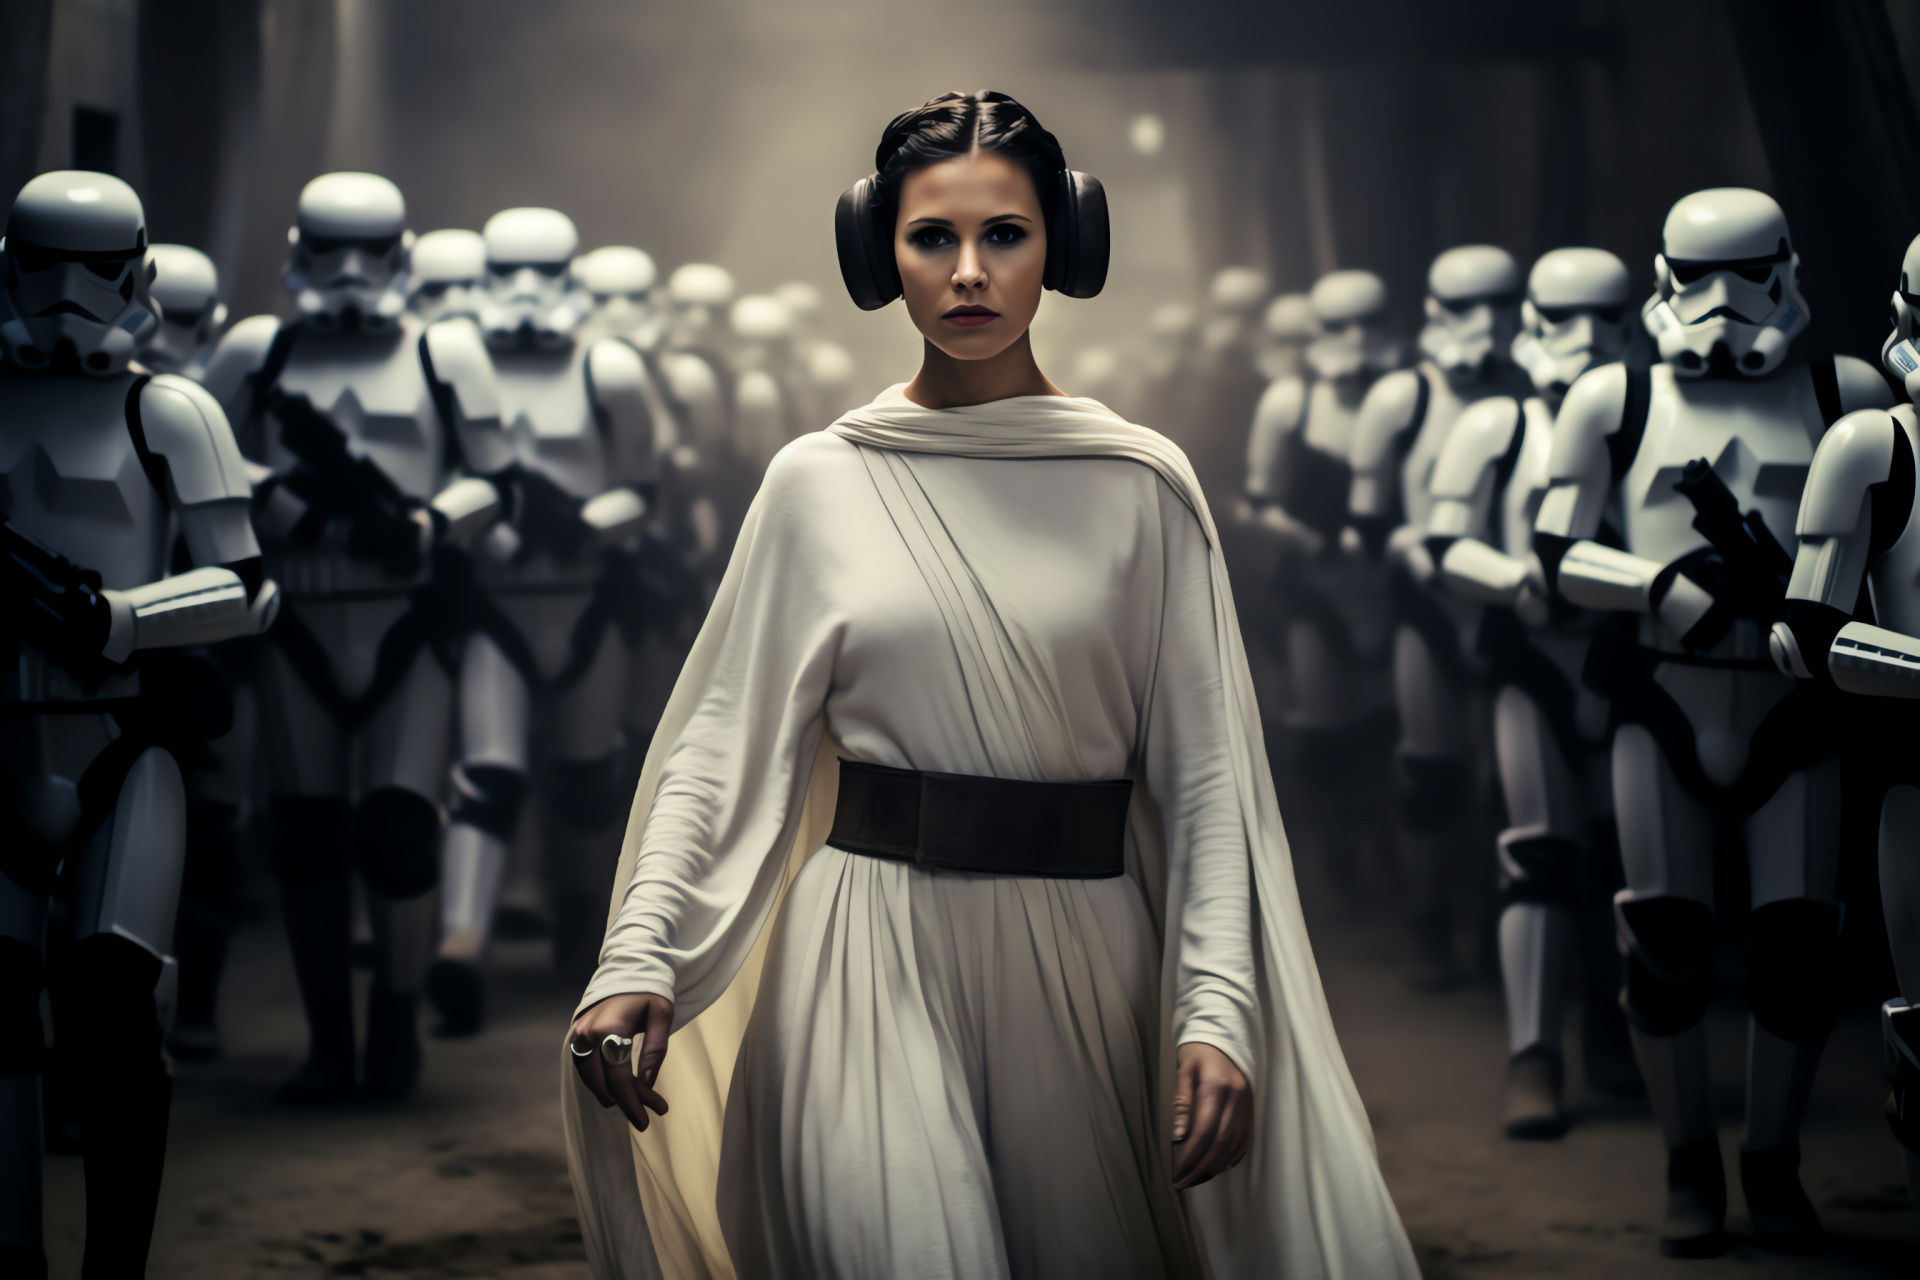 Princess Leia Organa, Galactic warfare, Rebel Alliance, Star Wars character, Intense stance, HD Desktop Image